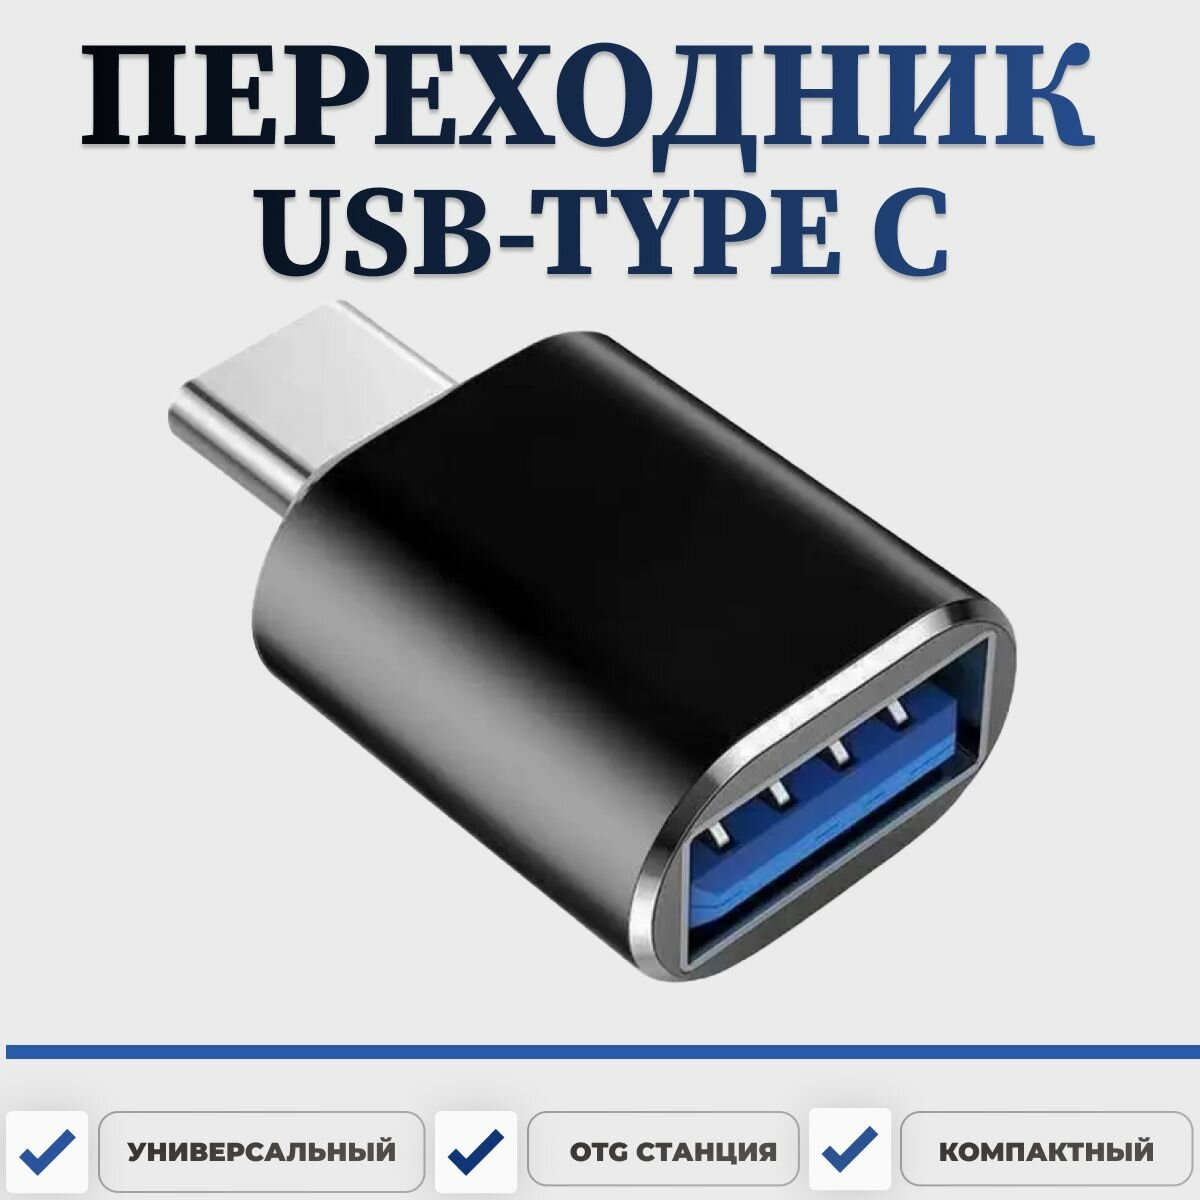 Переходники USB Type C 2 шт.  Адаптер USB с технологией OTG для зарядки и передачи данных. Флешка OTG для телефона планшета ноутбука  USB хаб.